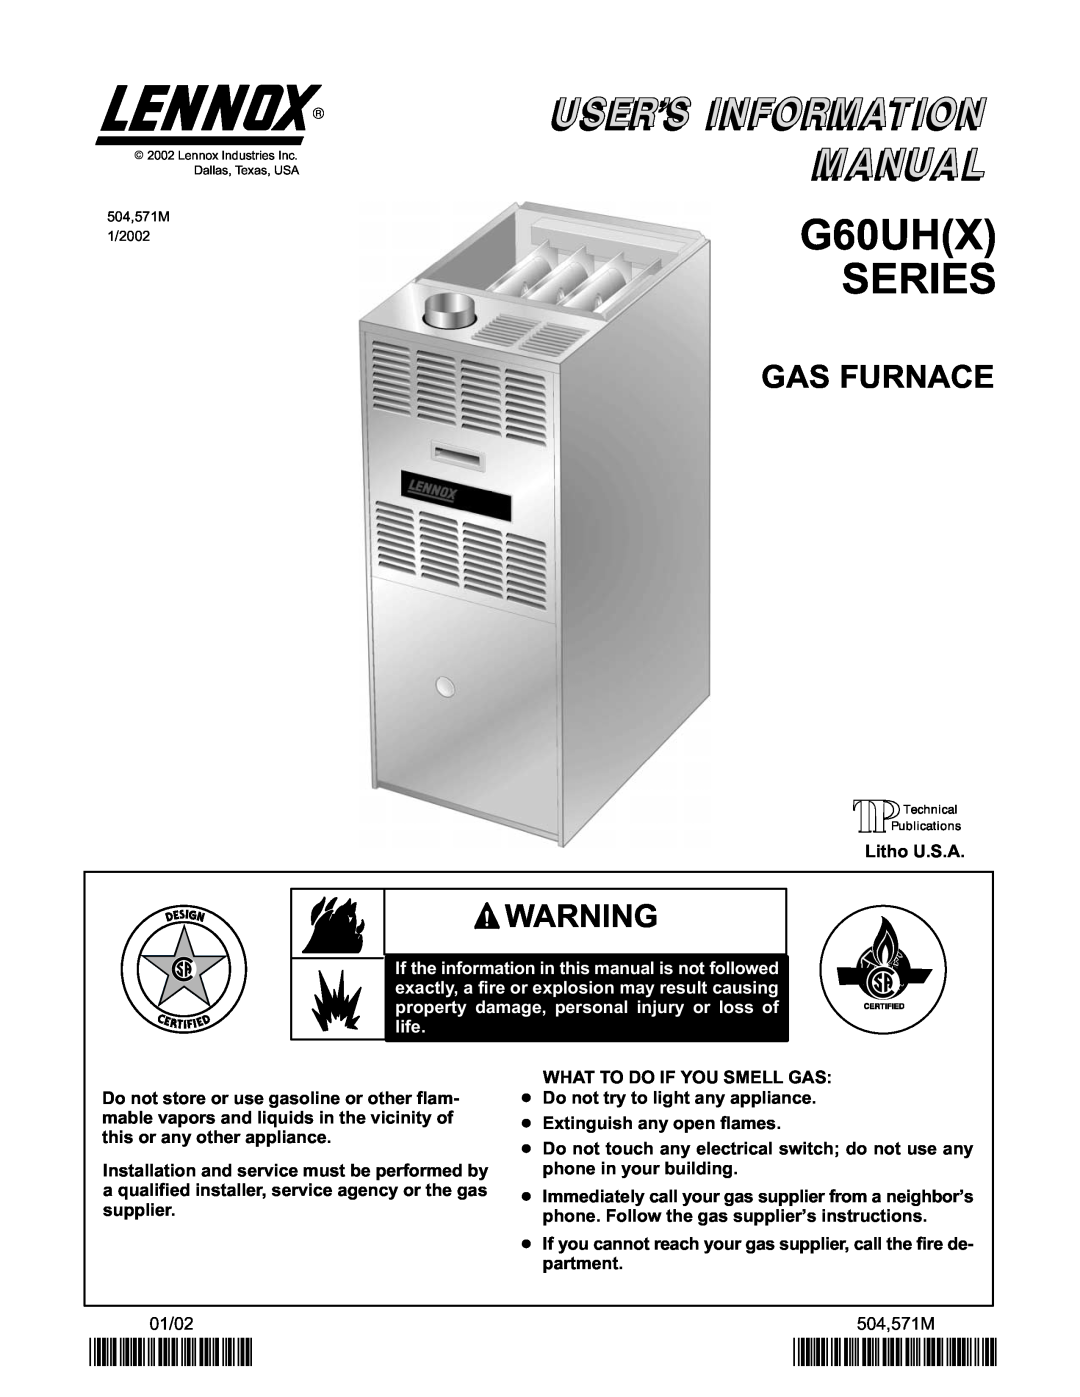 Lennox International Inc G60UH(X) manual G60UHX SERIES, Gas Furnace, 2P0102, P504571M 